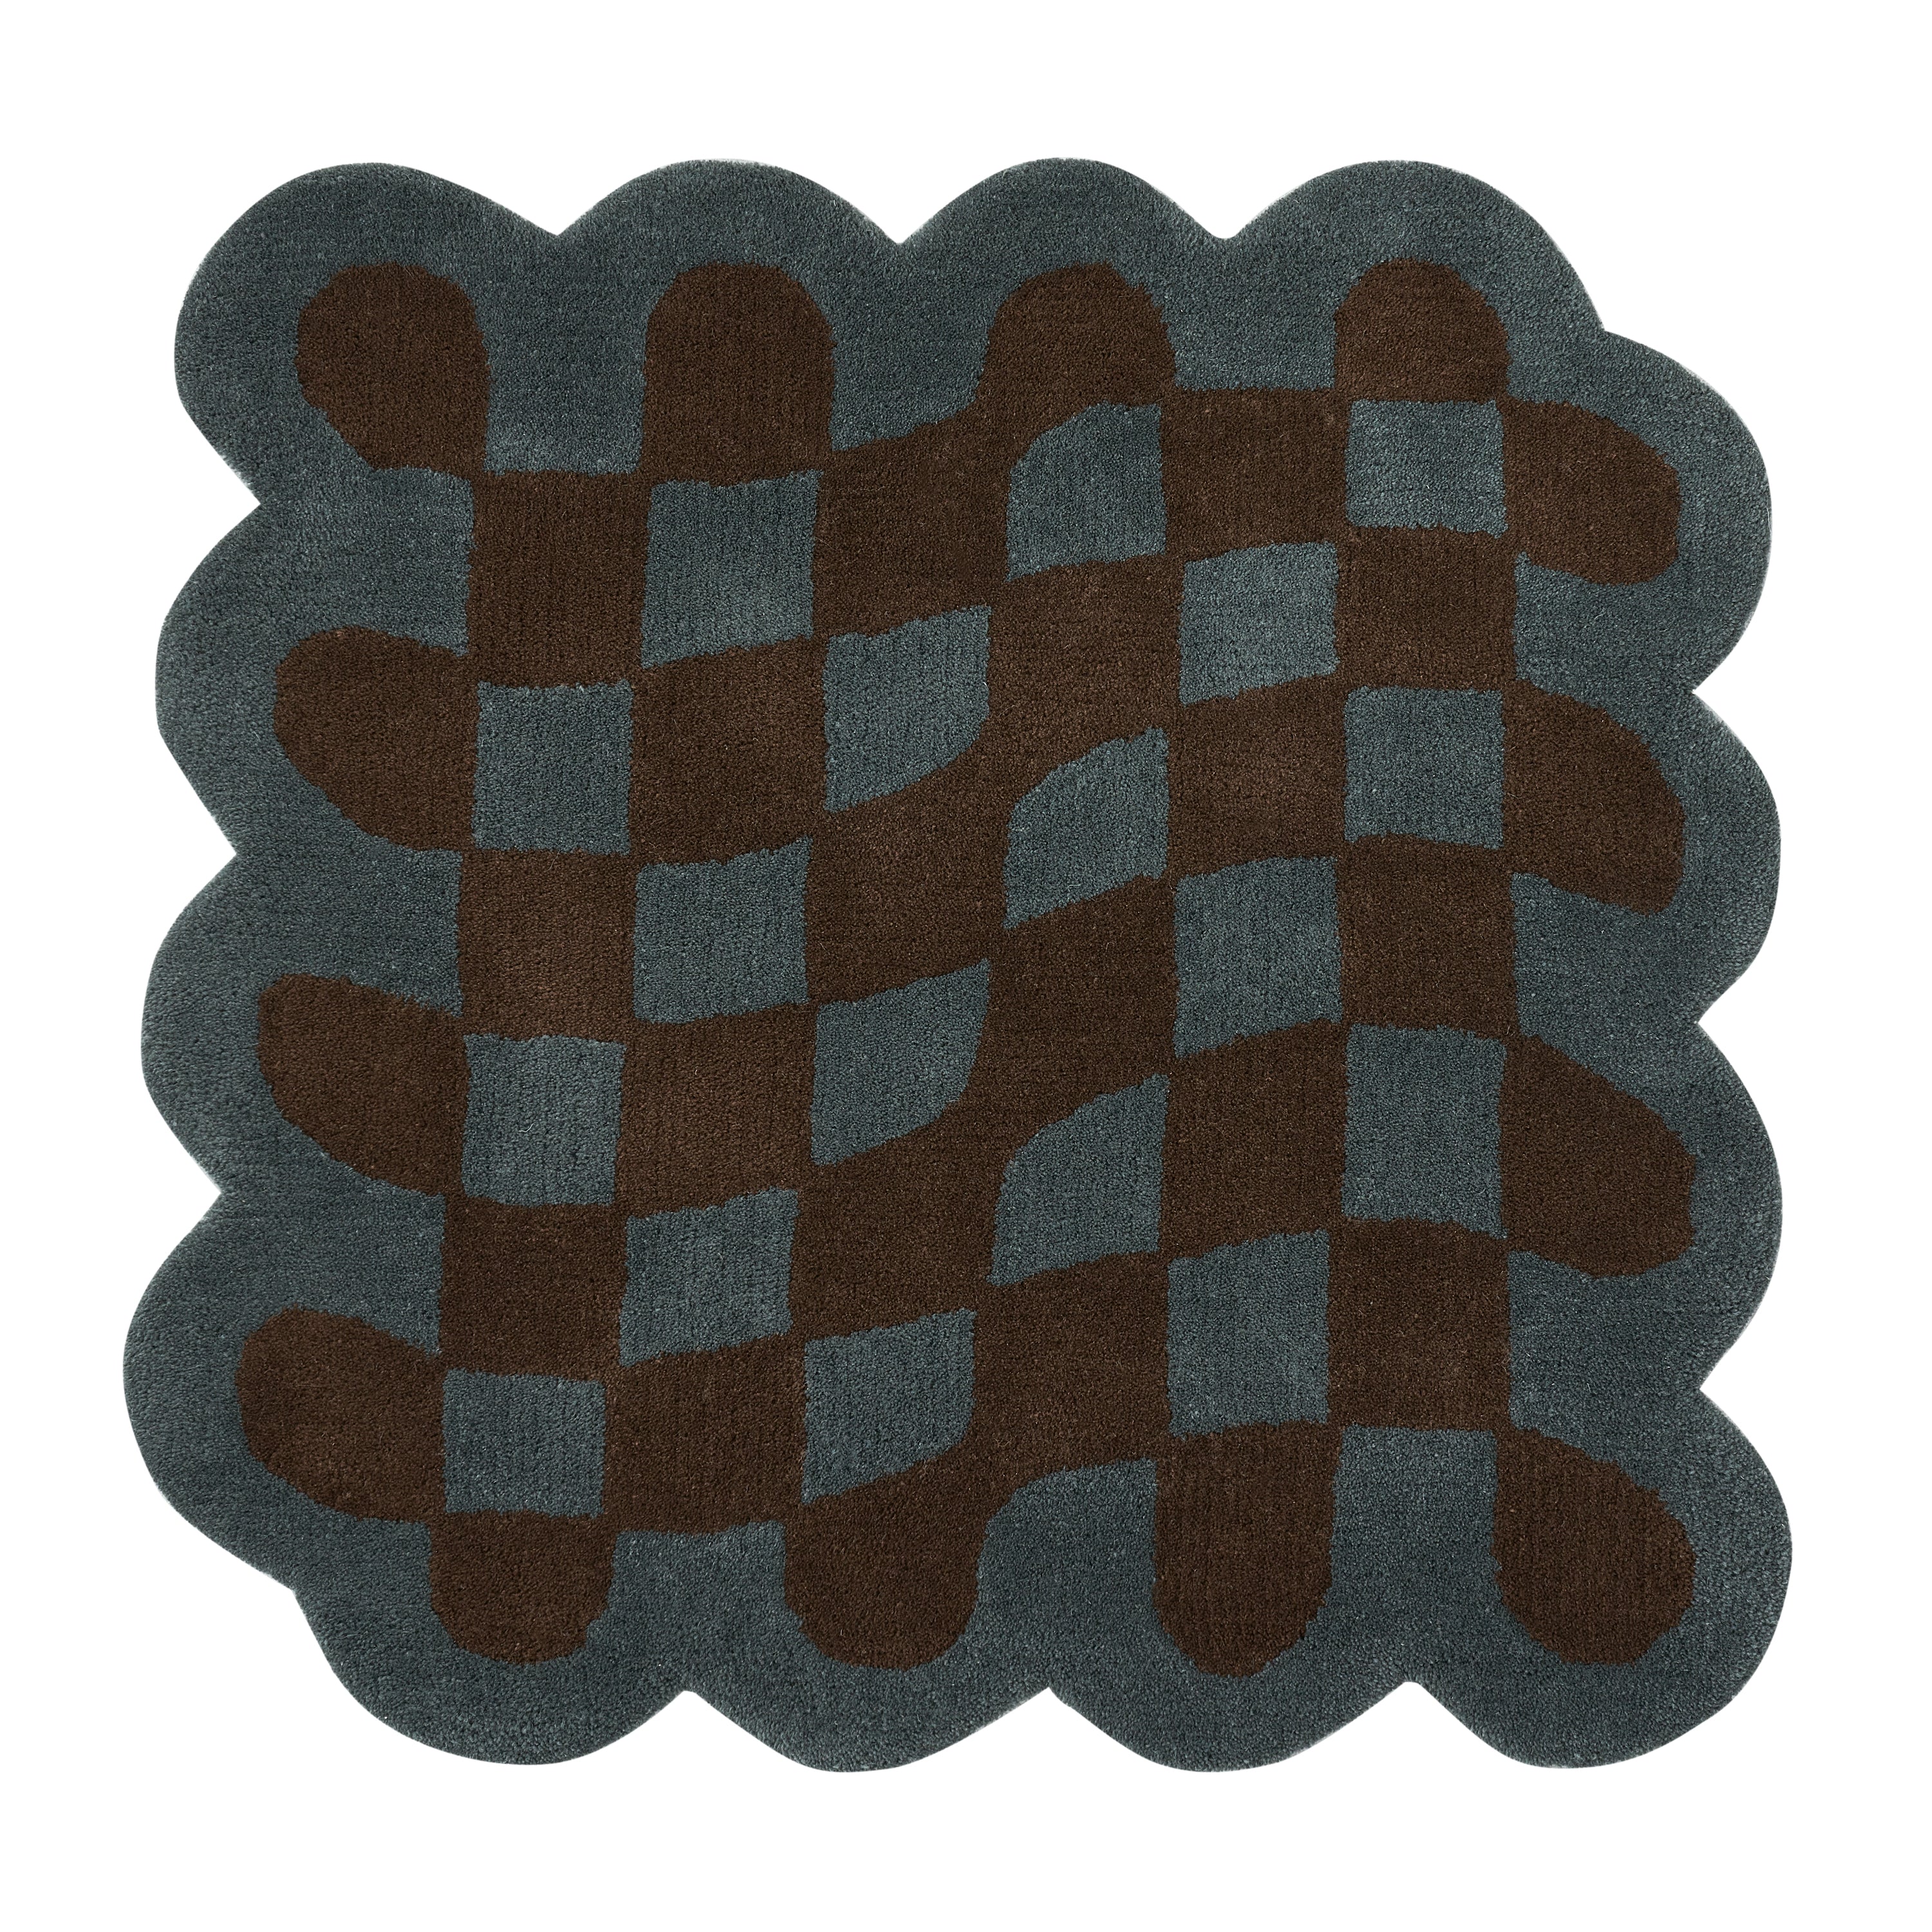 Wavy chess board rug - Charcoal grey x Brown